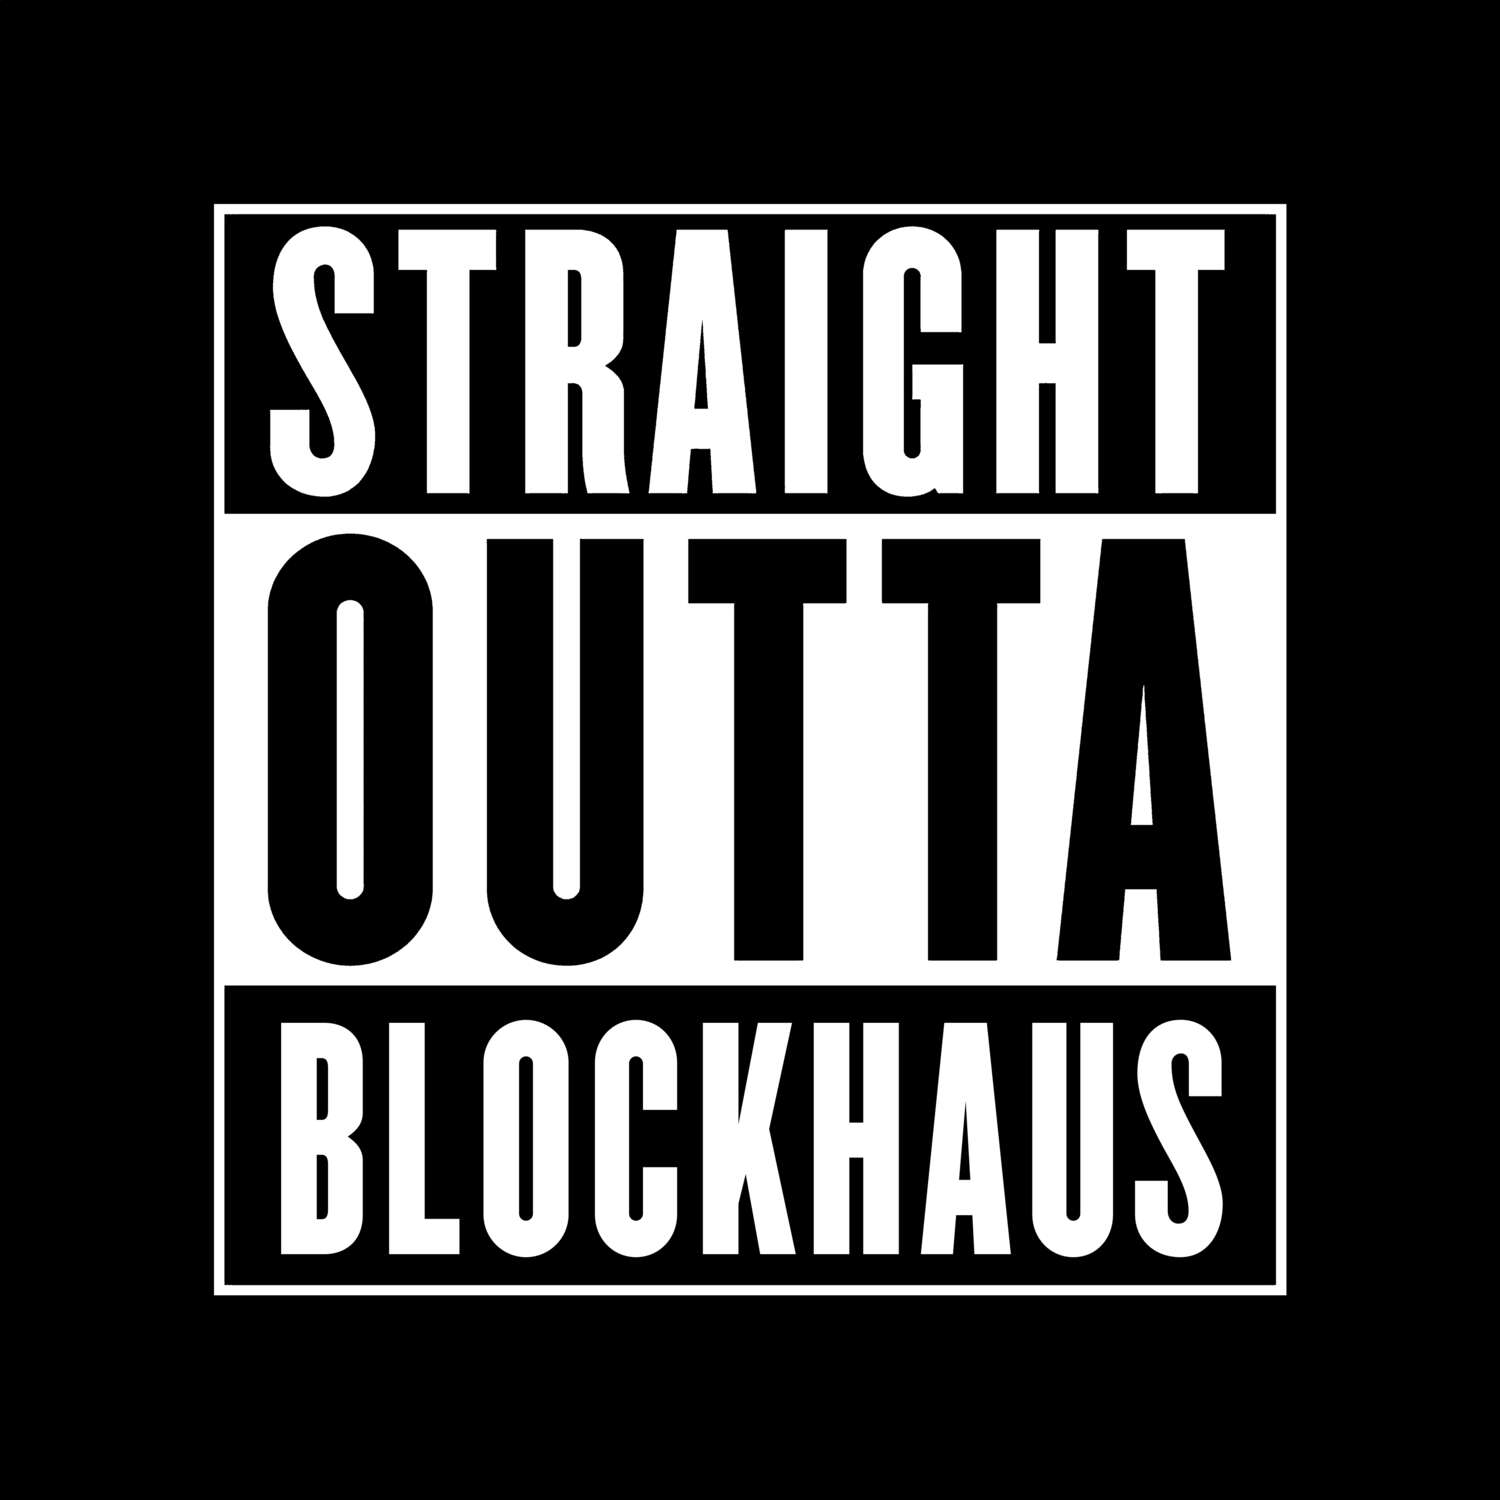 Blockhaus T-Shirt »Straight Outta«